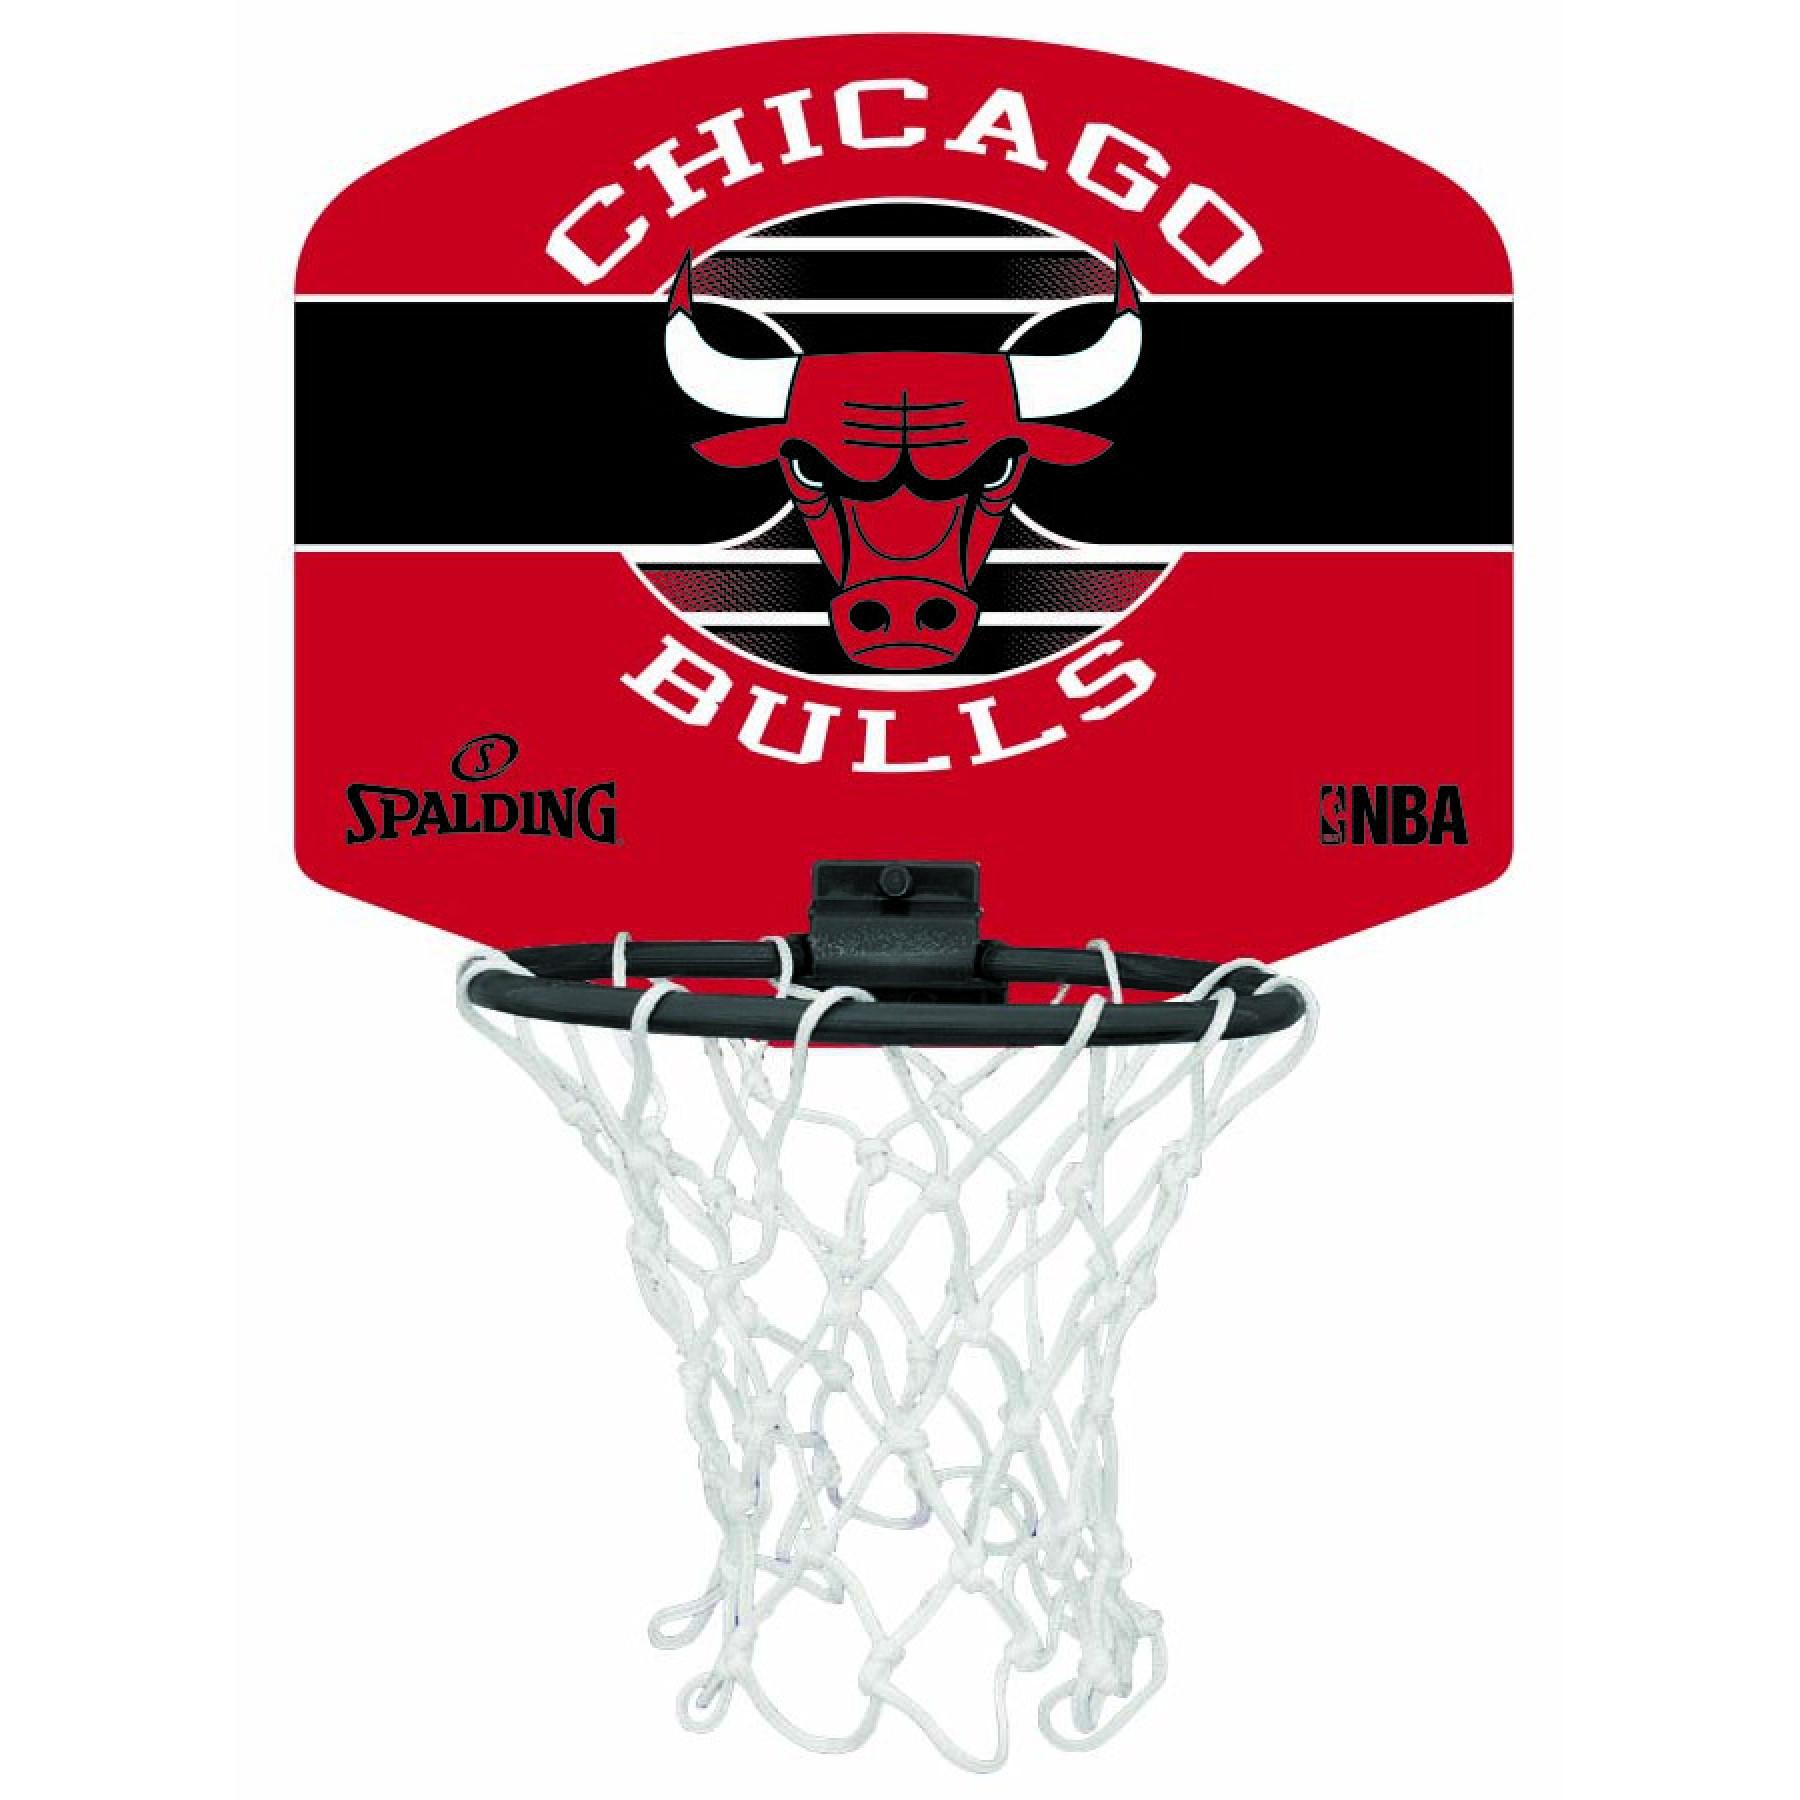 Mini basket Spalding Chicago Bulls